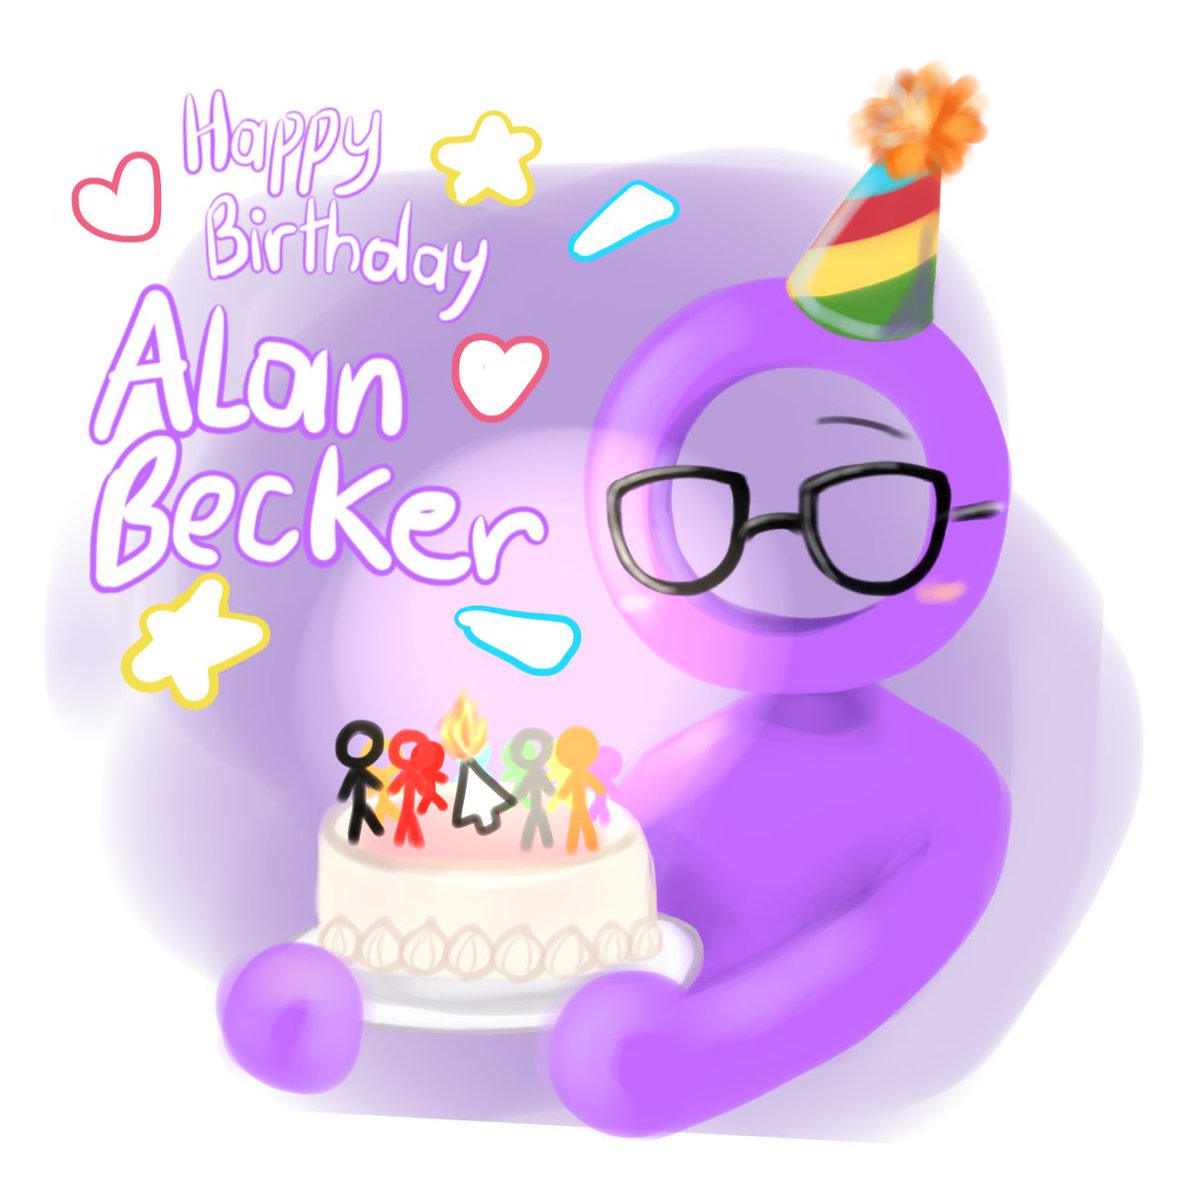 HAPPY BIRTHDAY ALAN BECKER 🎉🎂🎁🎊
#Alanbecker
#AvM #AvA
#stickfigure